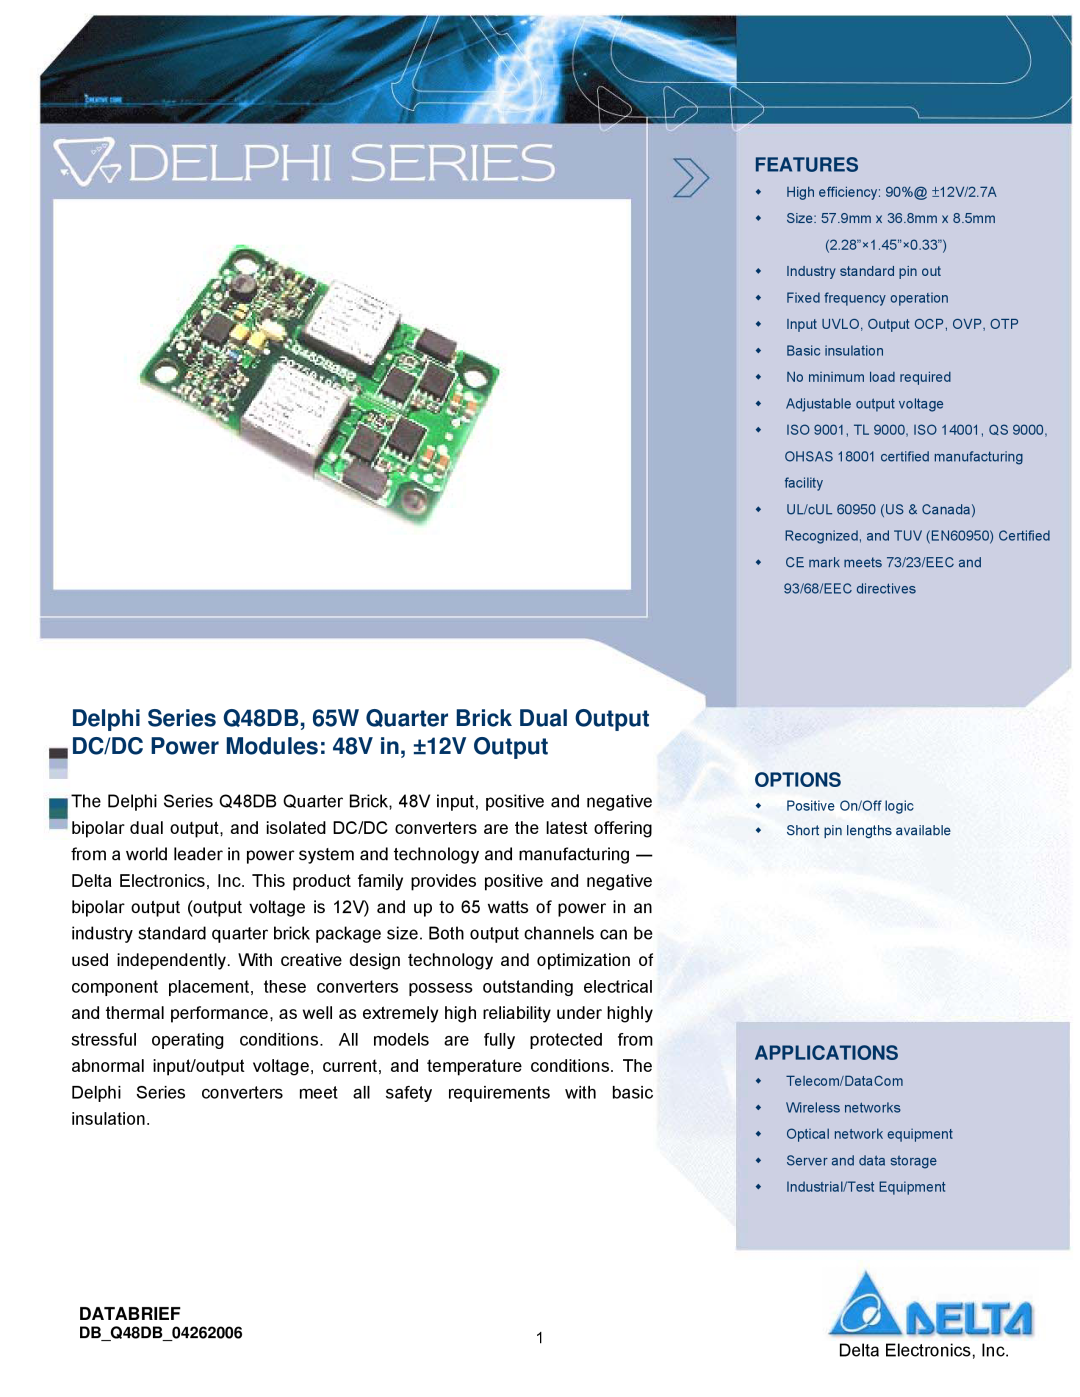 Delta Electronics Q48DB manual Features, Options, Applications, Databrief 